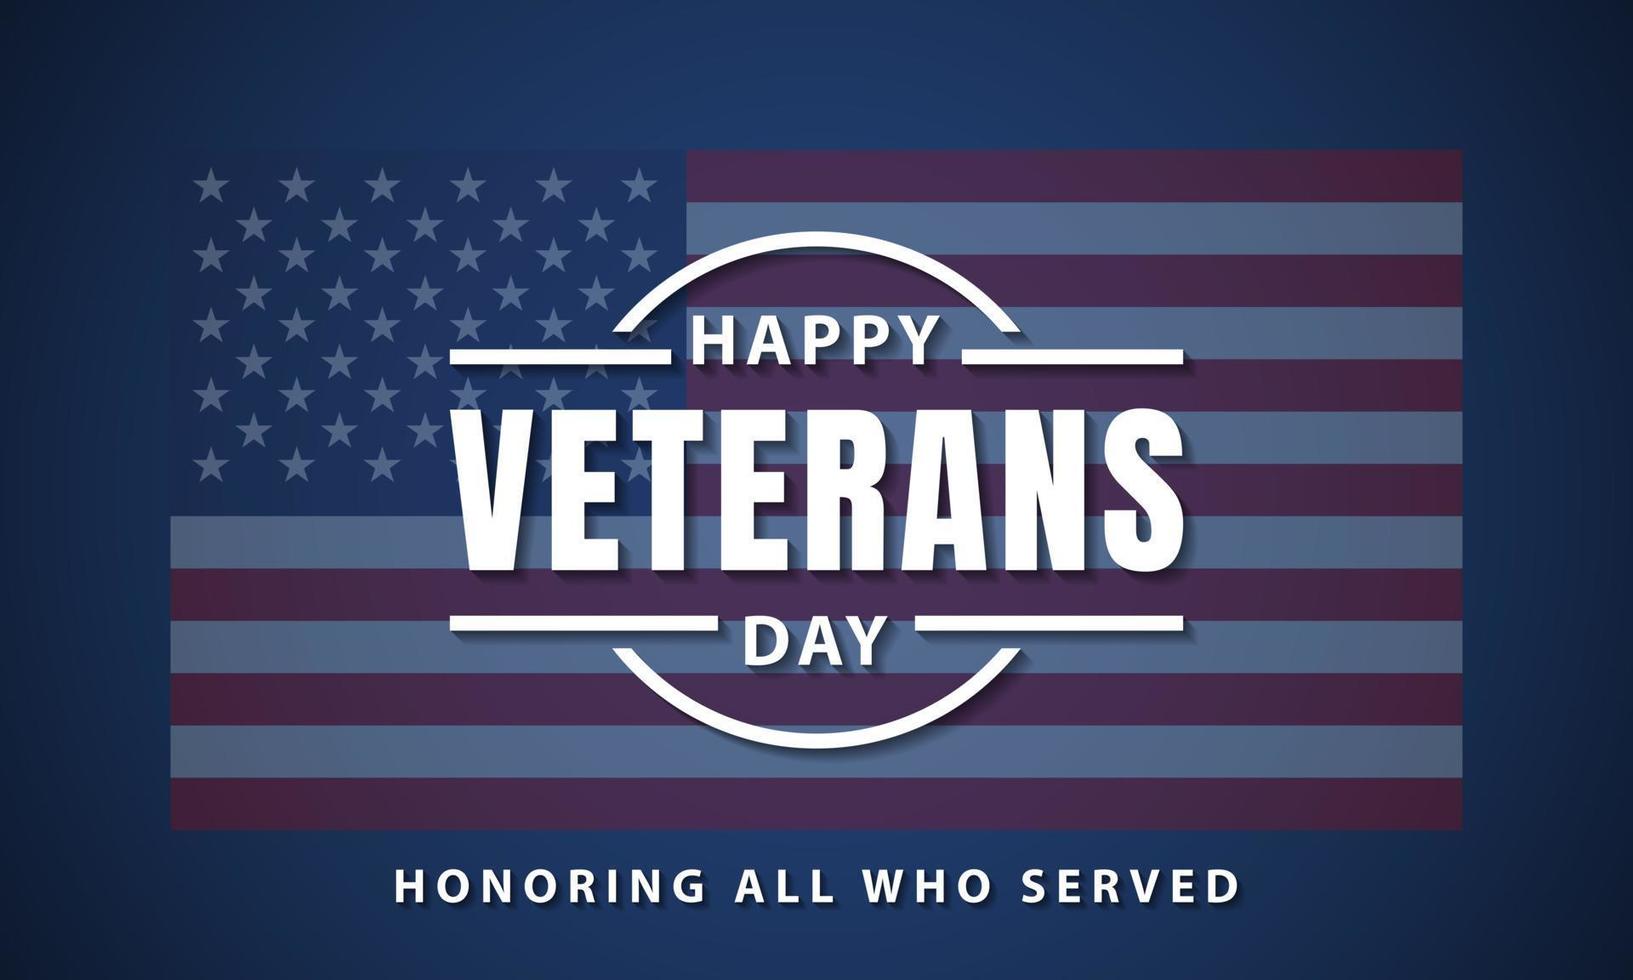 Veterans Day Background Design. vector